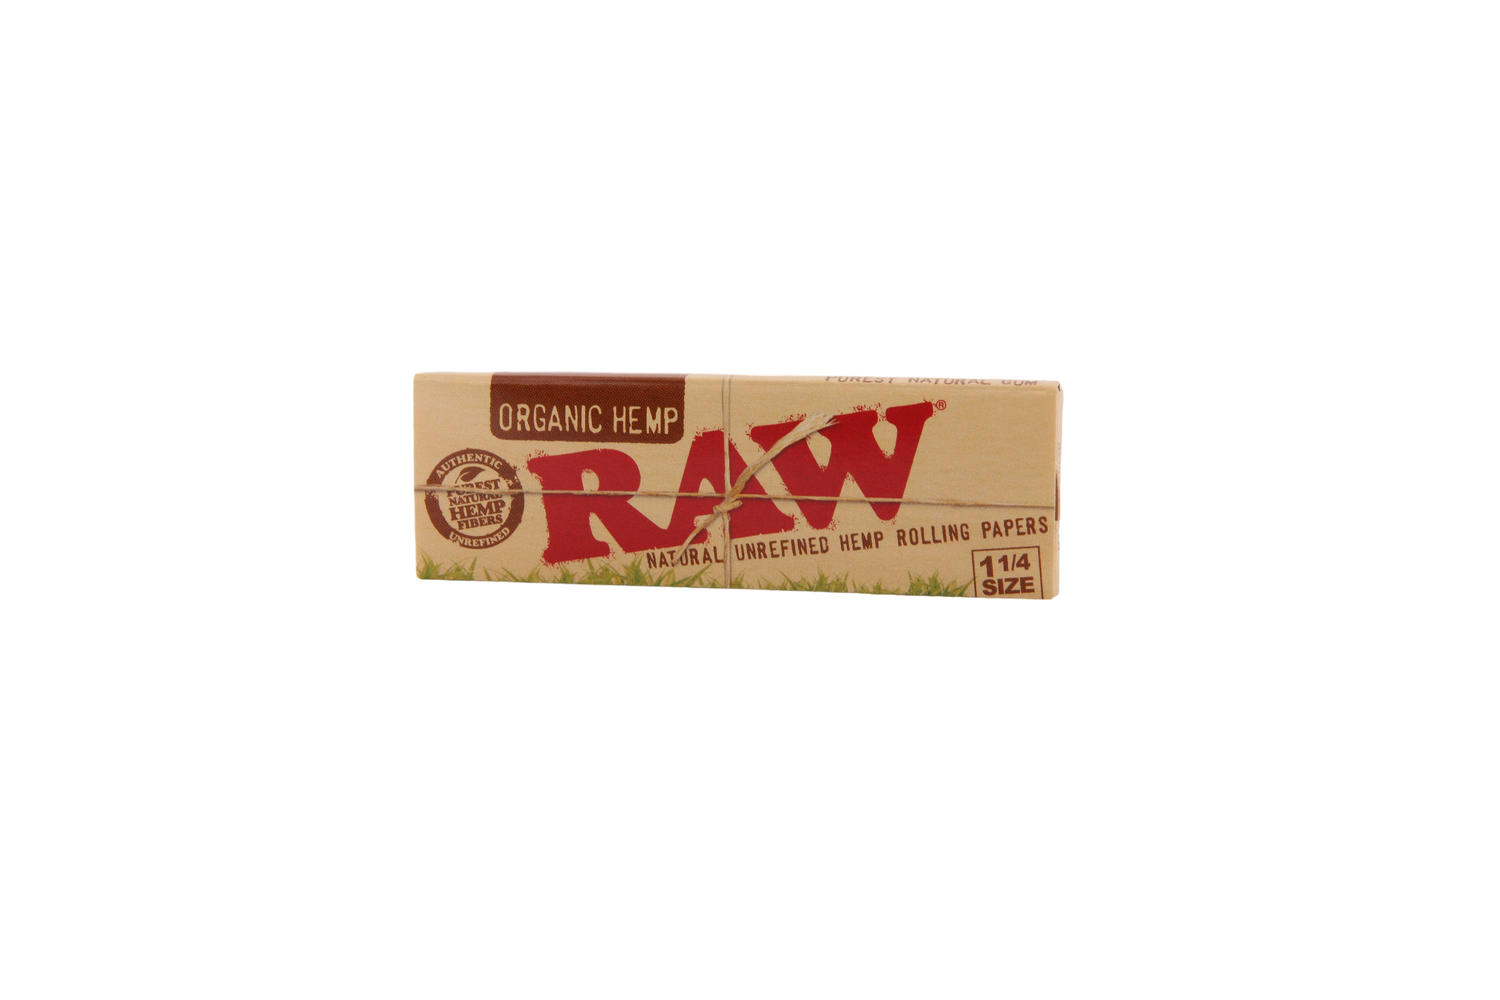 Raw Organic Hemp Papers - 1 1/4